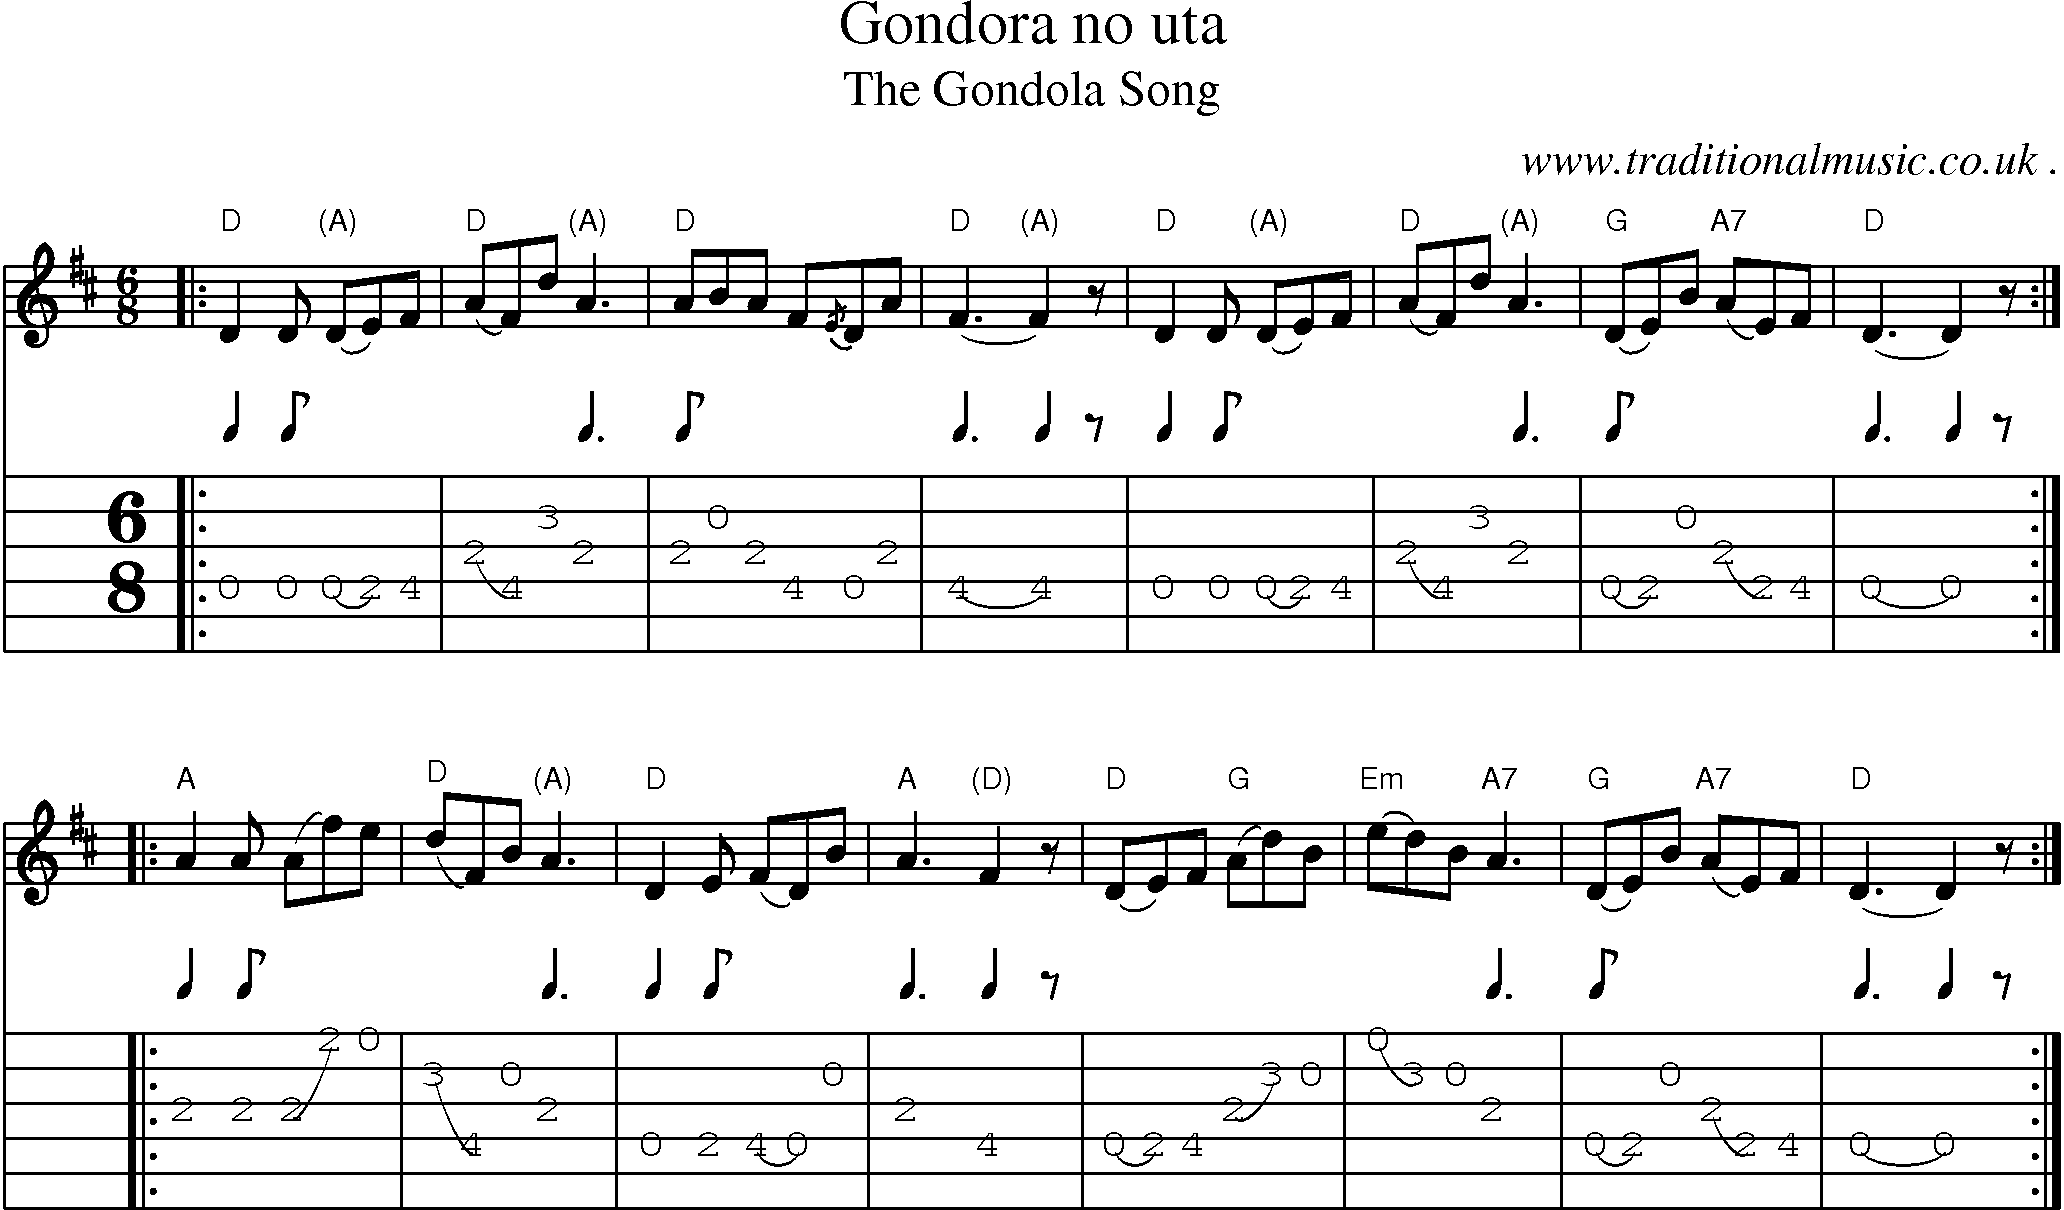 Sheet-music  score, Chords and Guitar Tabs for Gondora No Uta